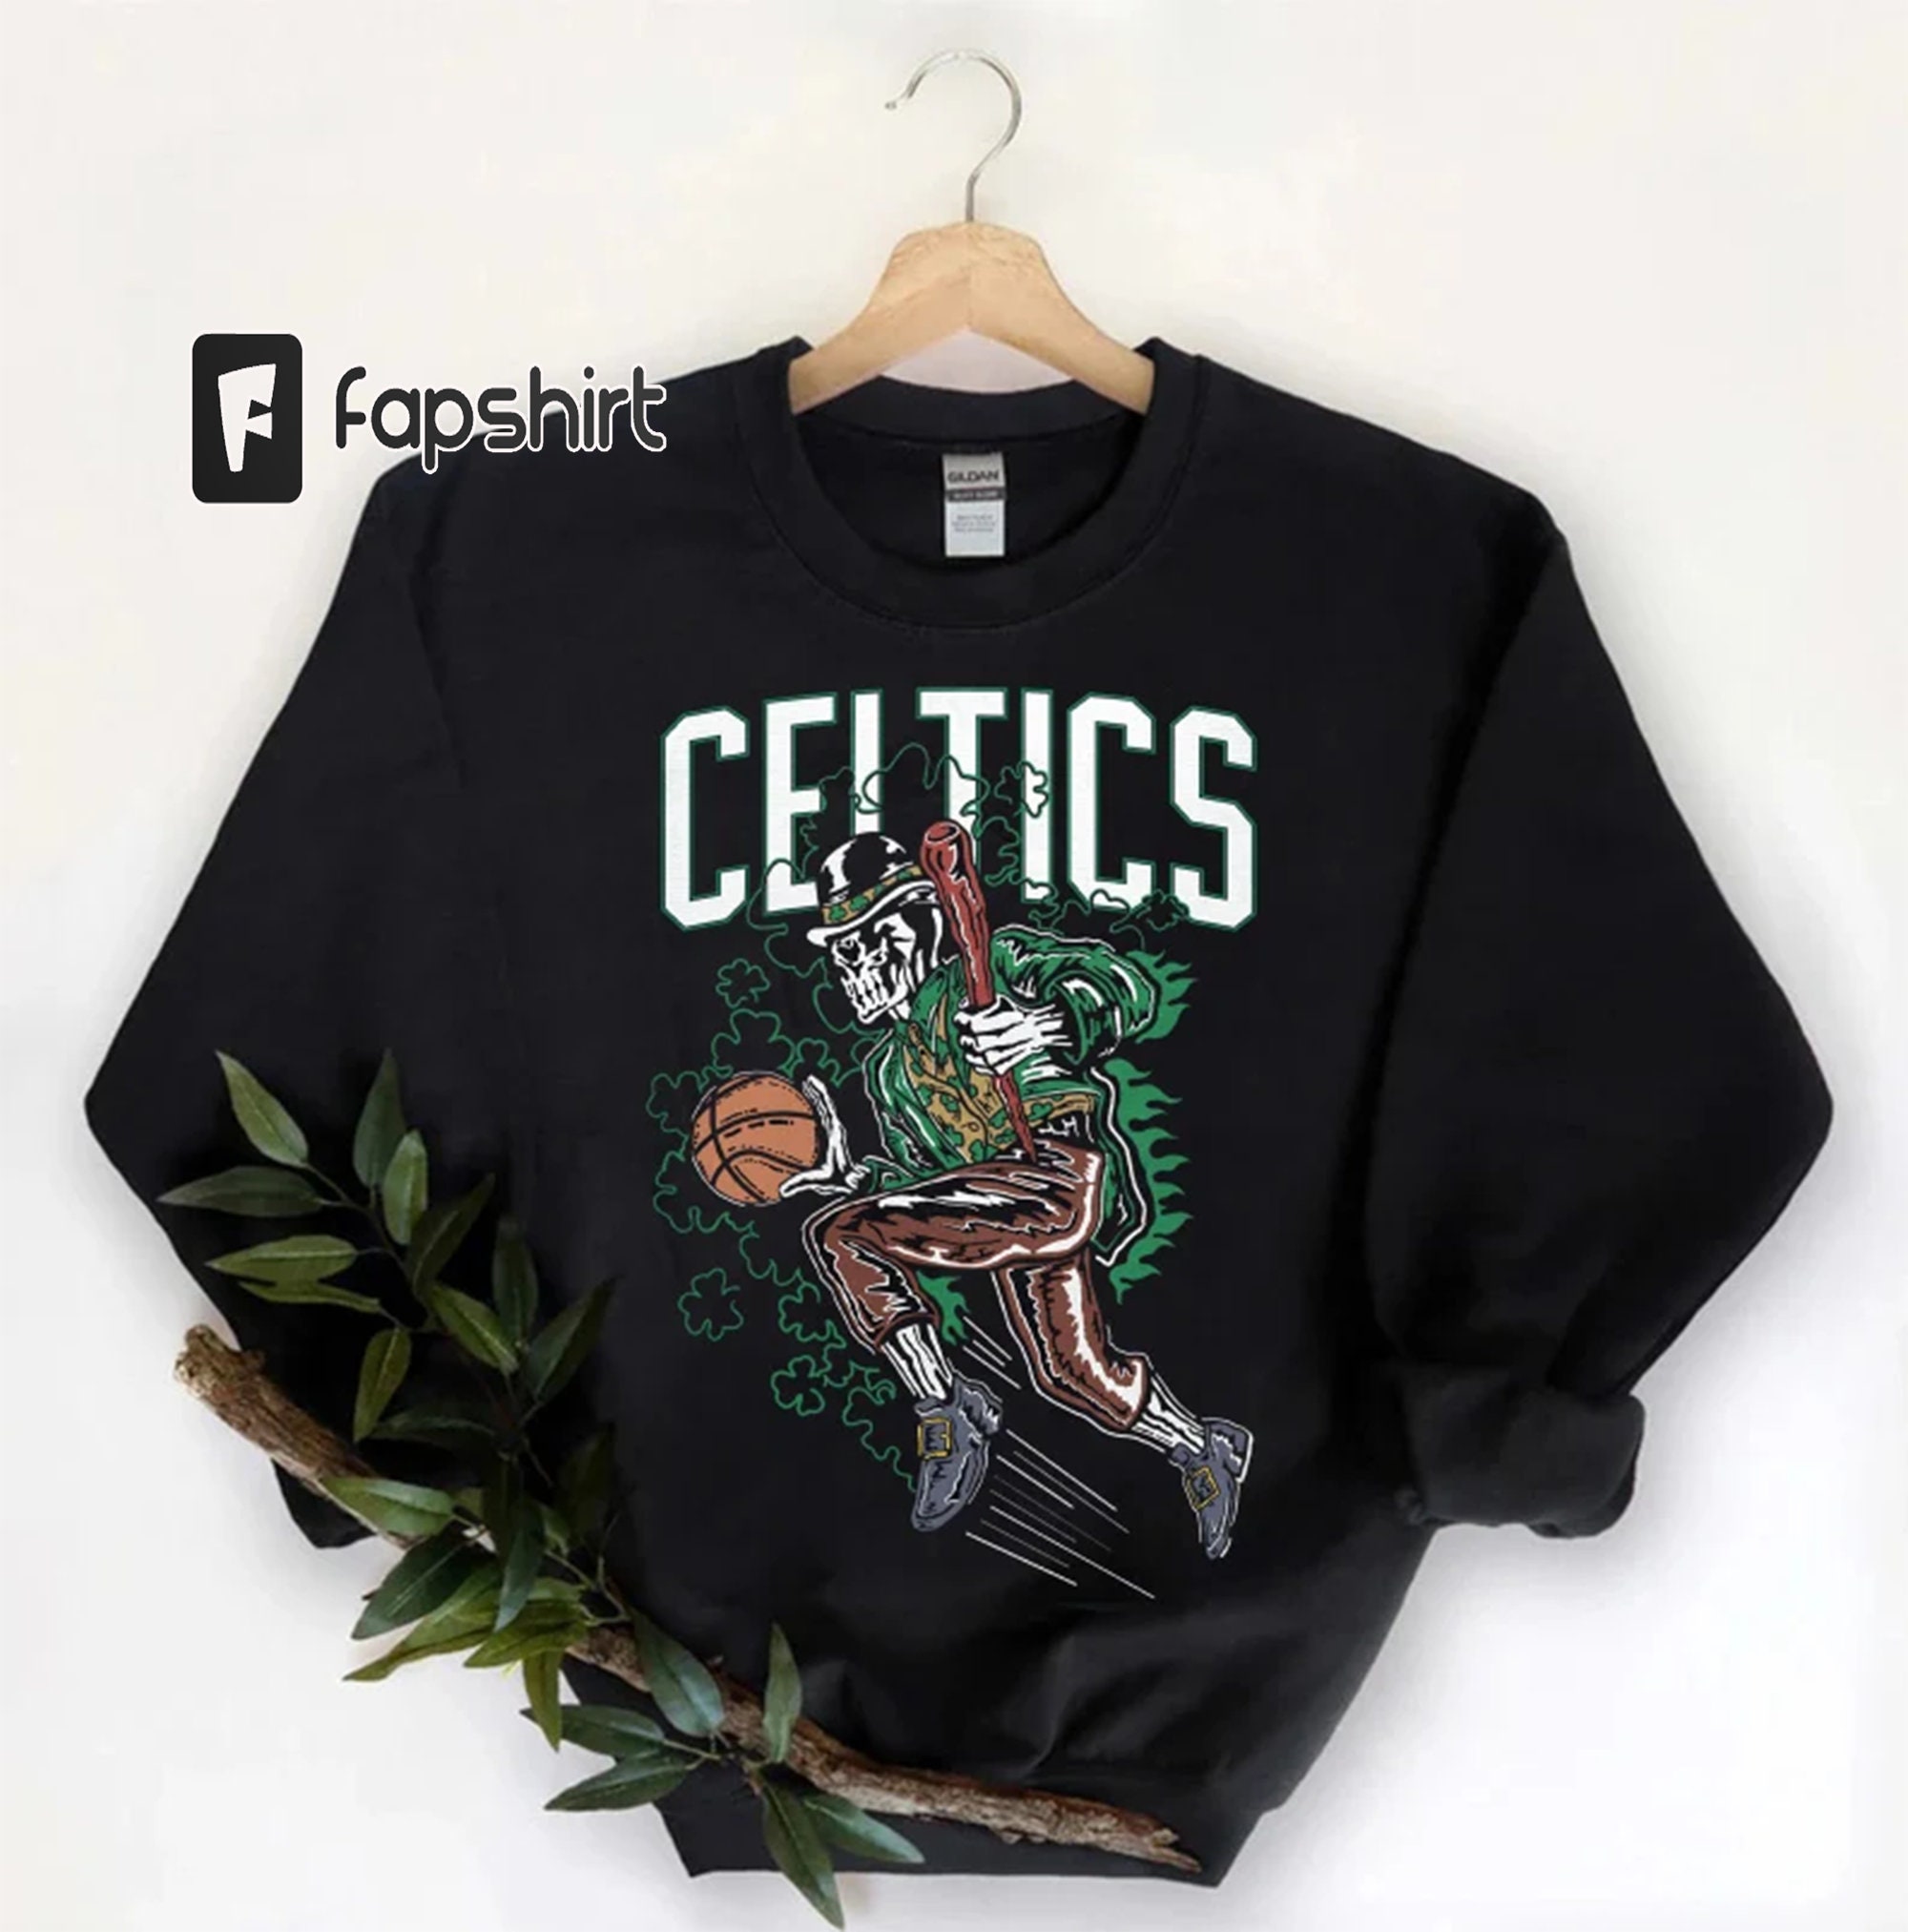 Boston Celtics Looney Tunes All Character Graphic T-Shirt - Mens